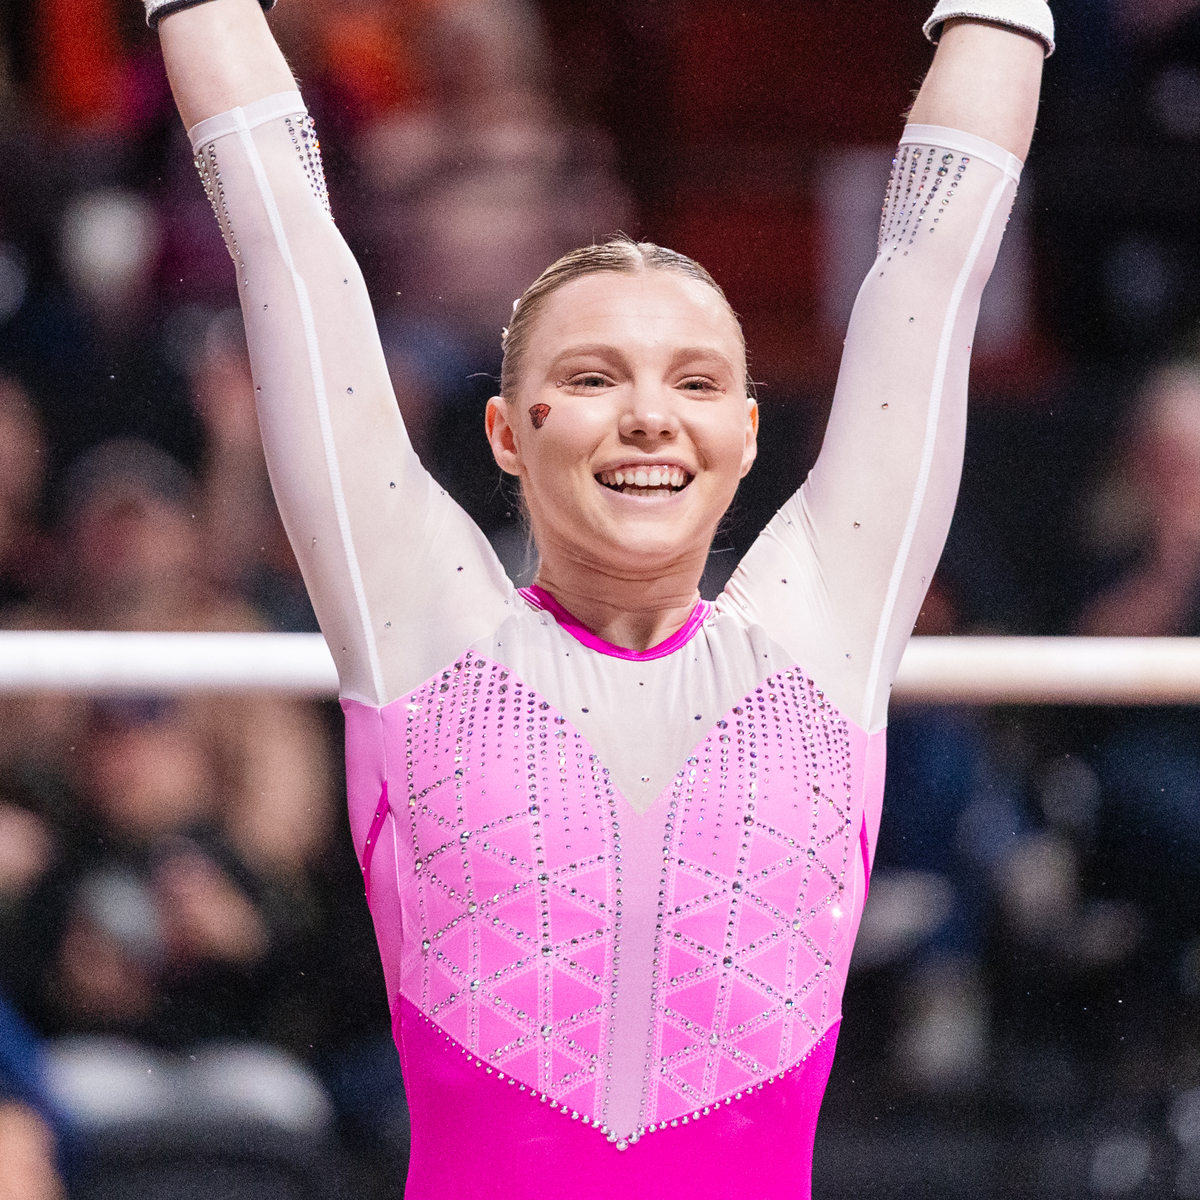 How Olympic Gymnast Jade Carey Overcomes Battle With “Twisties”